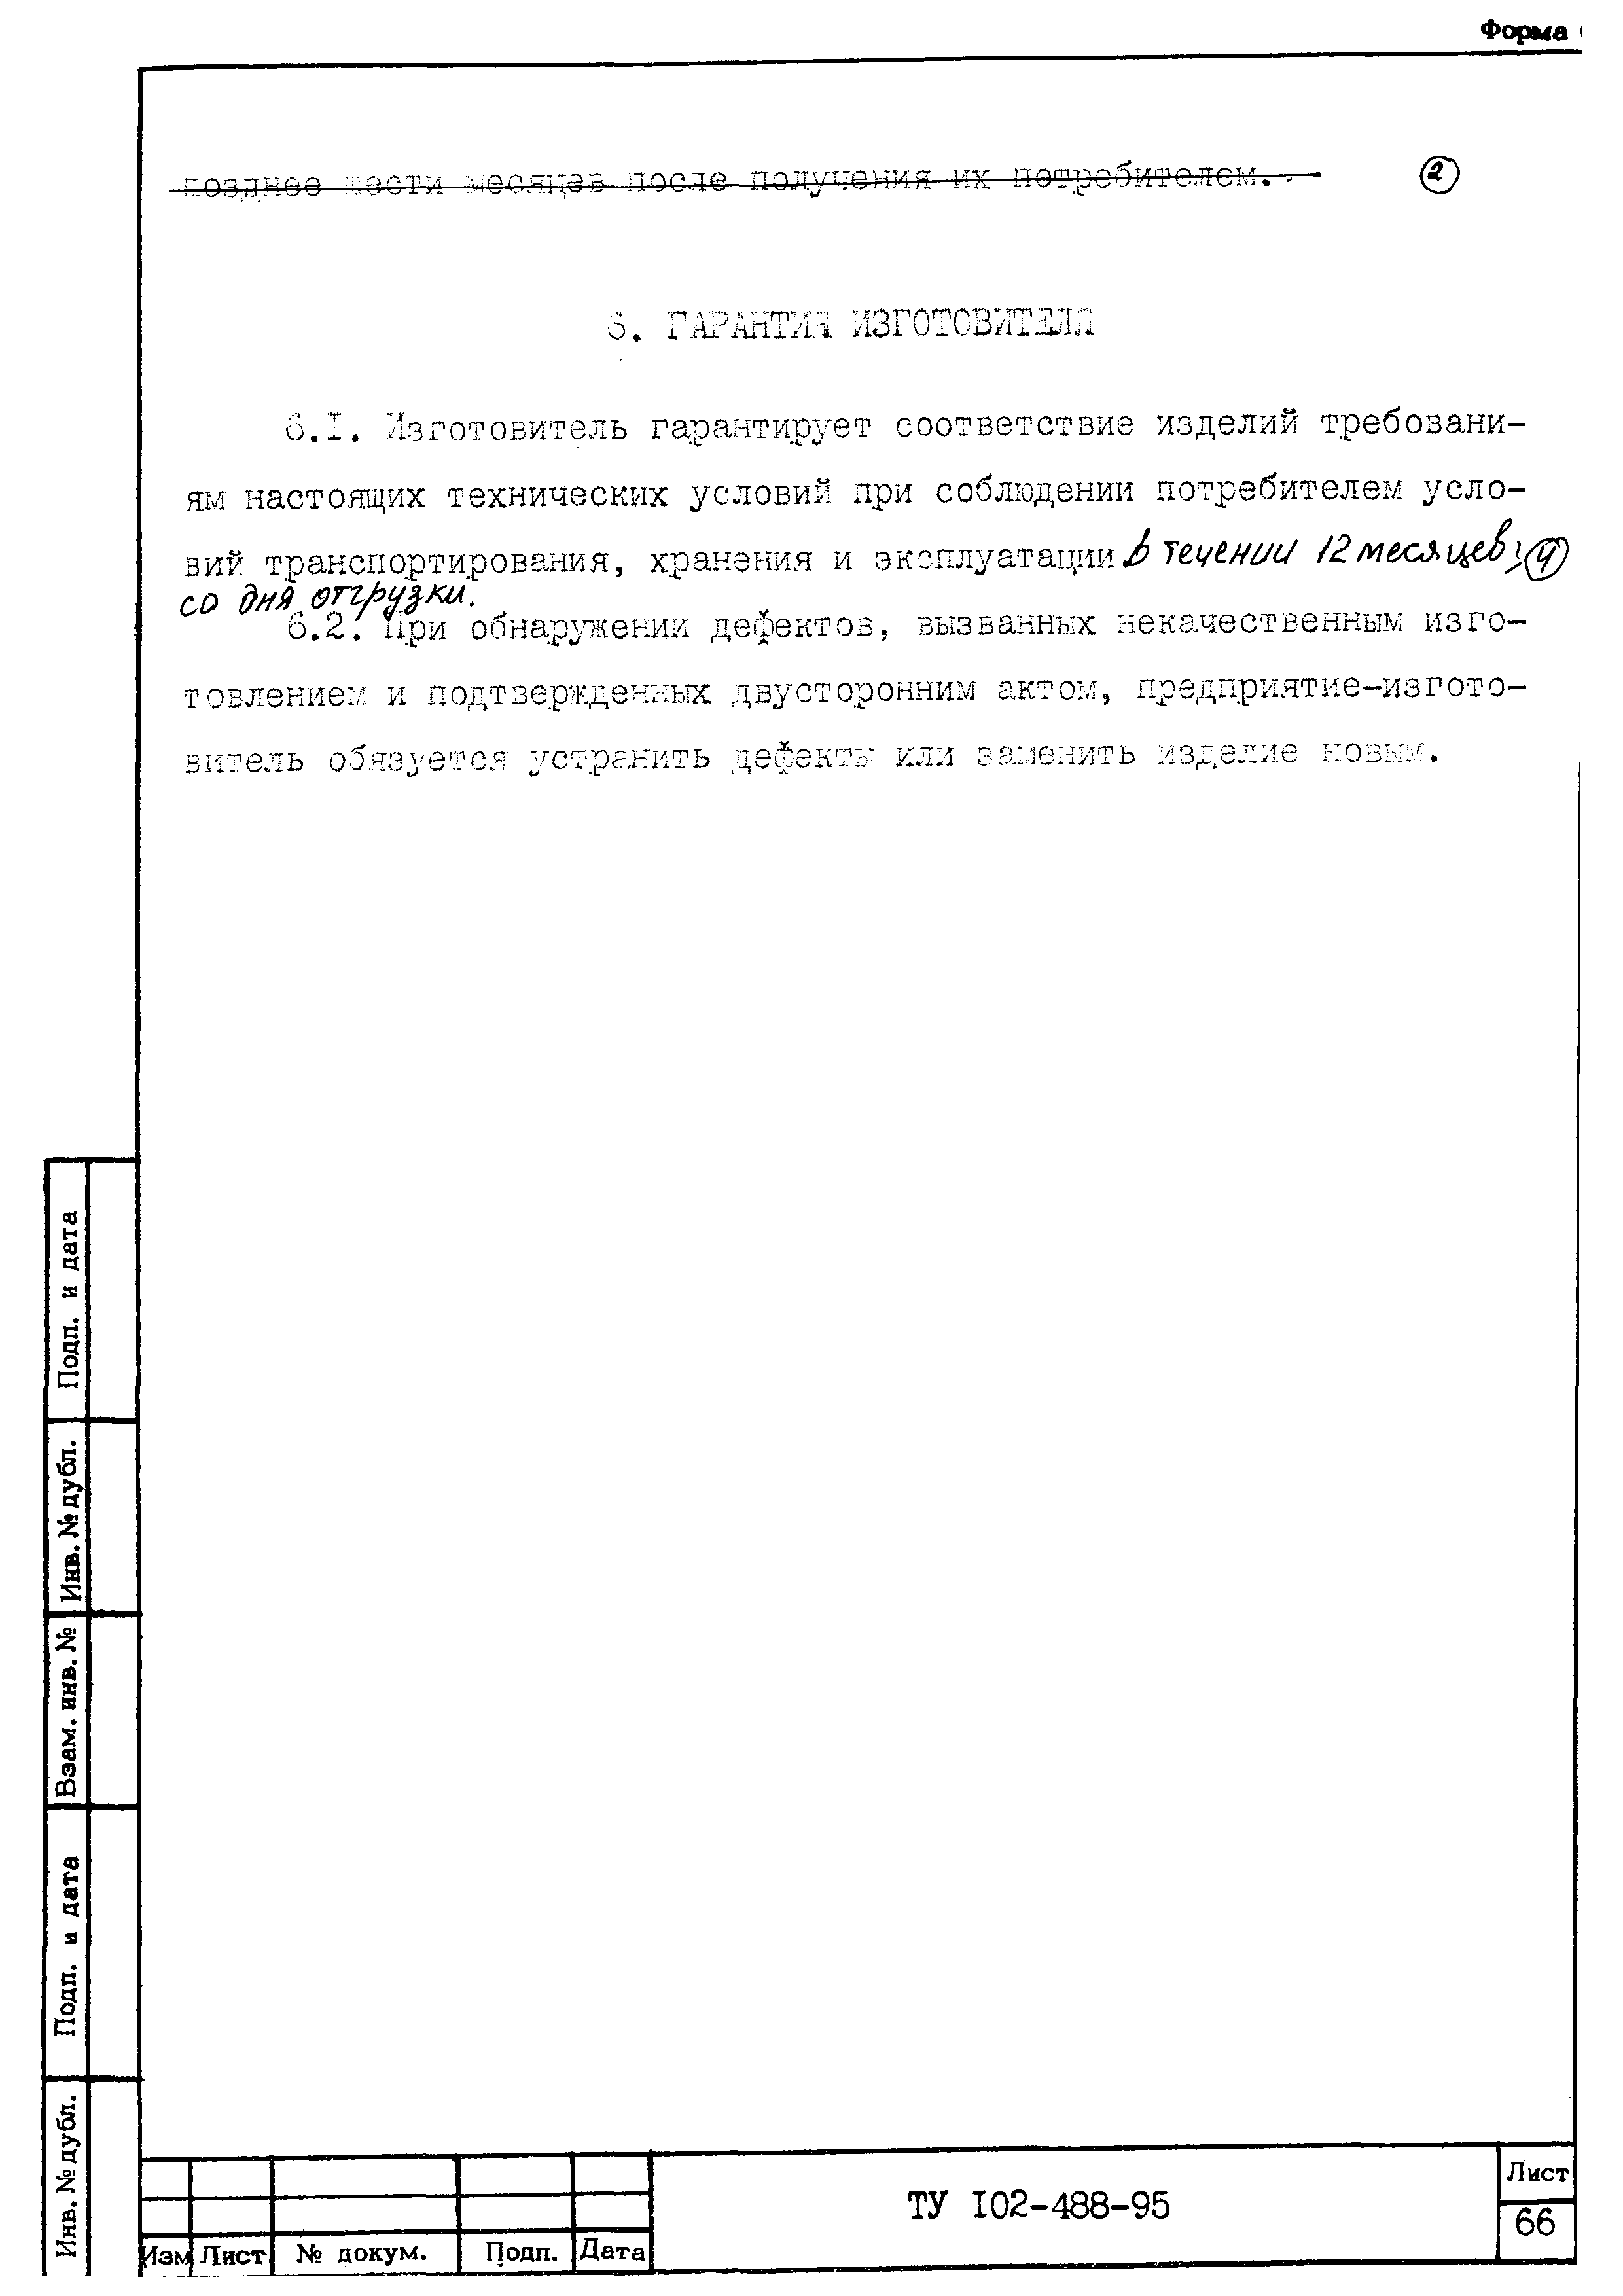 ТУ 102-488-95